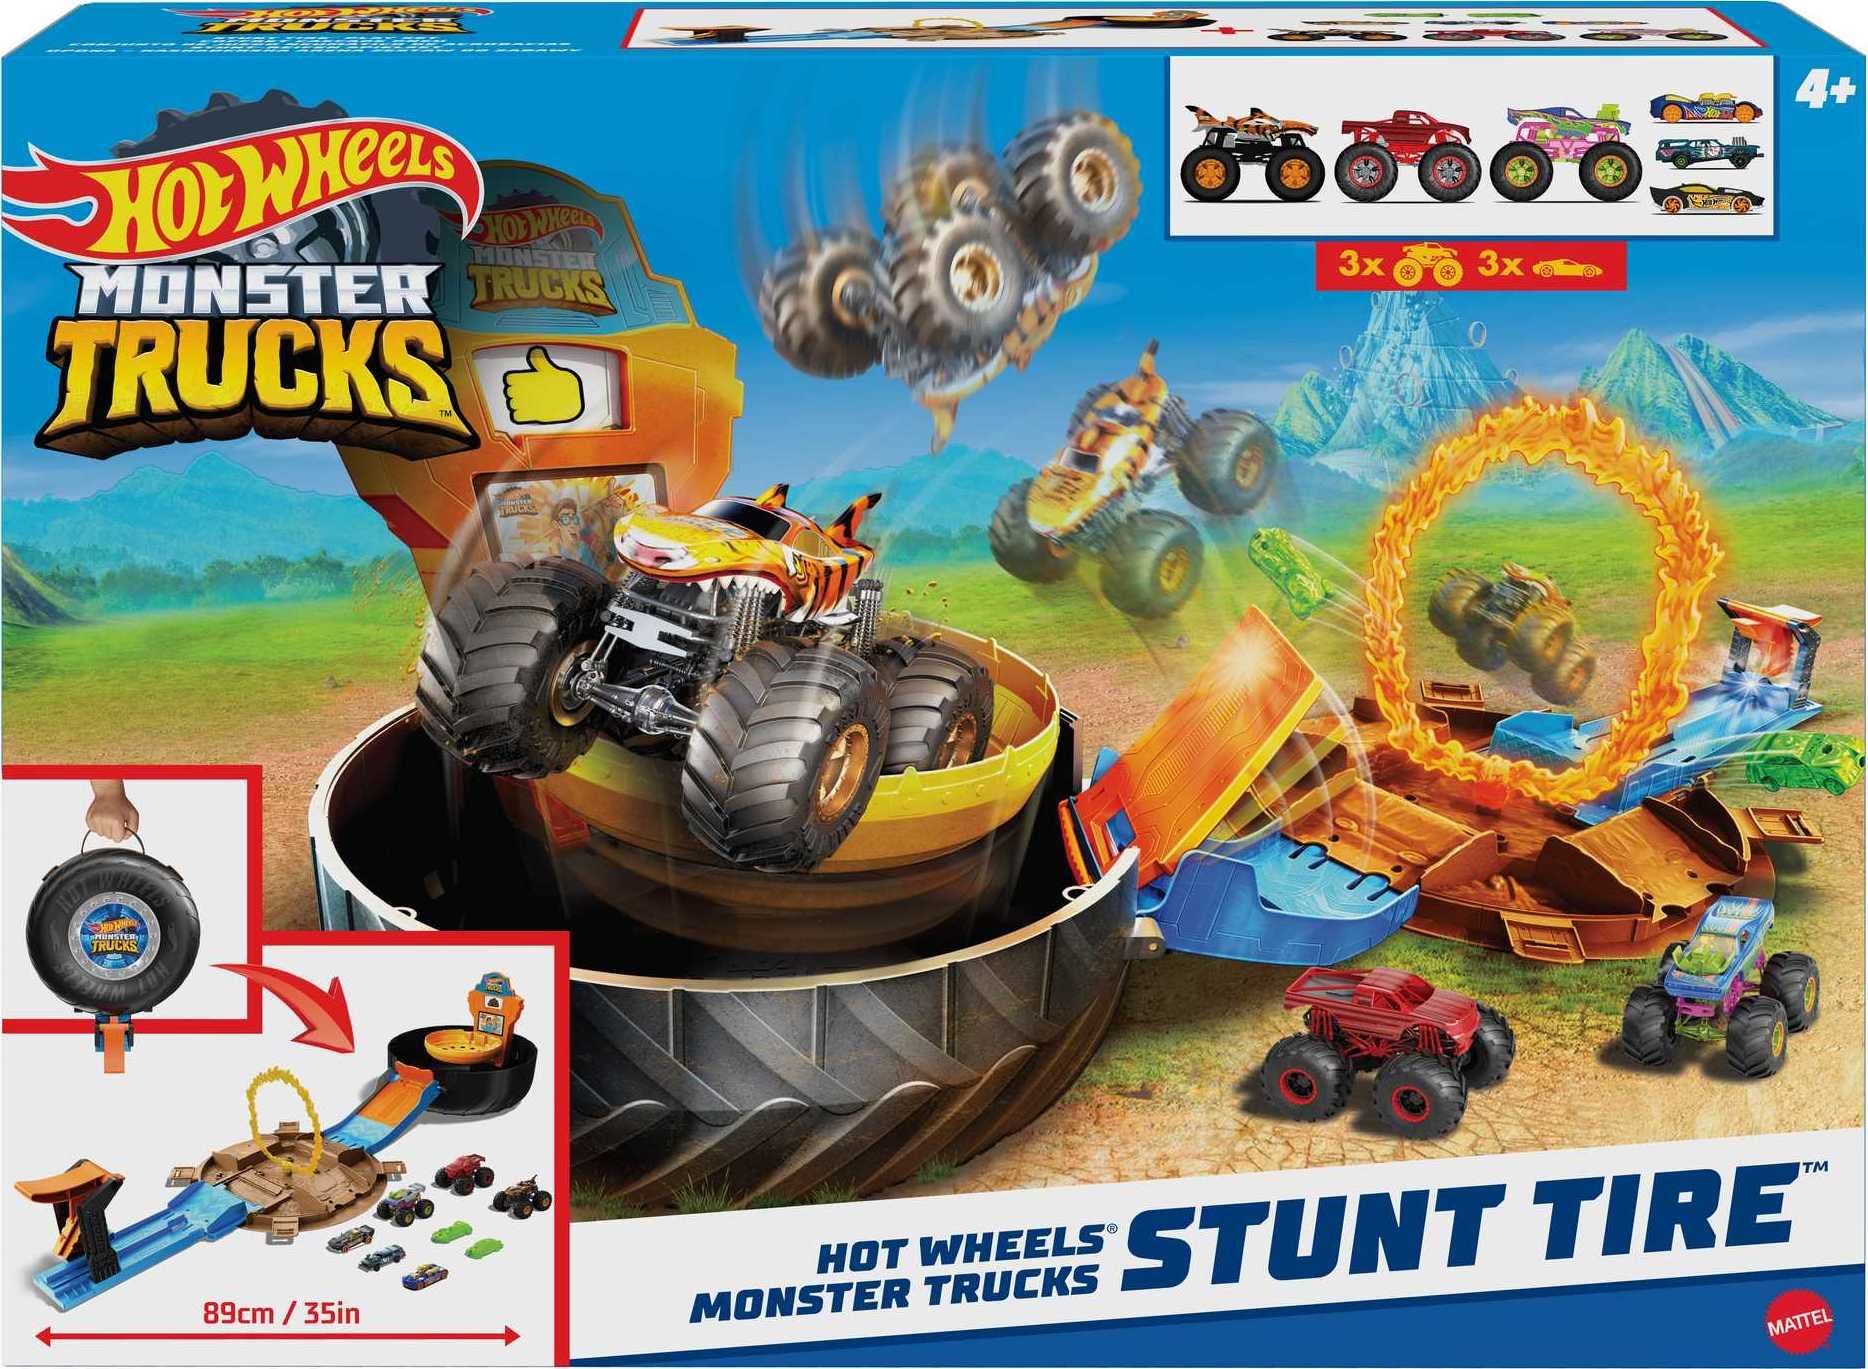 Hot Wheels Monster Trucks Stunt Tire Playset With 3 Toy Monster Trucks & 4 Hot Wheels Toy Cars in 1:64 Scale [Amazon Exclusive]